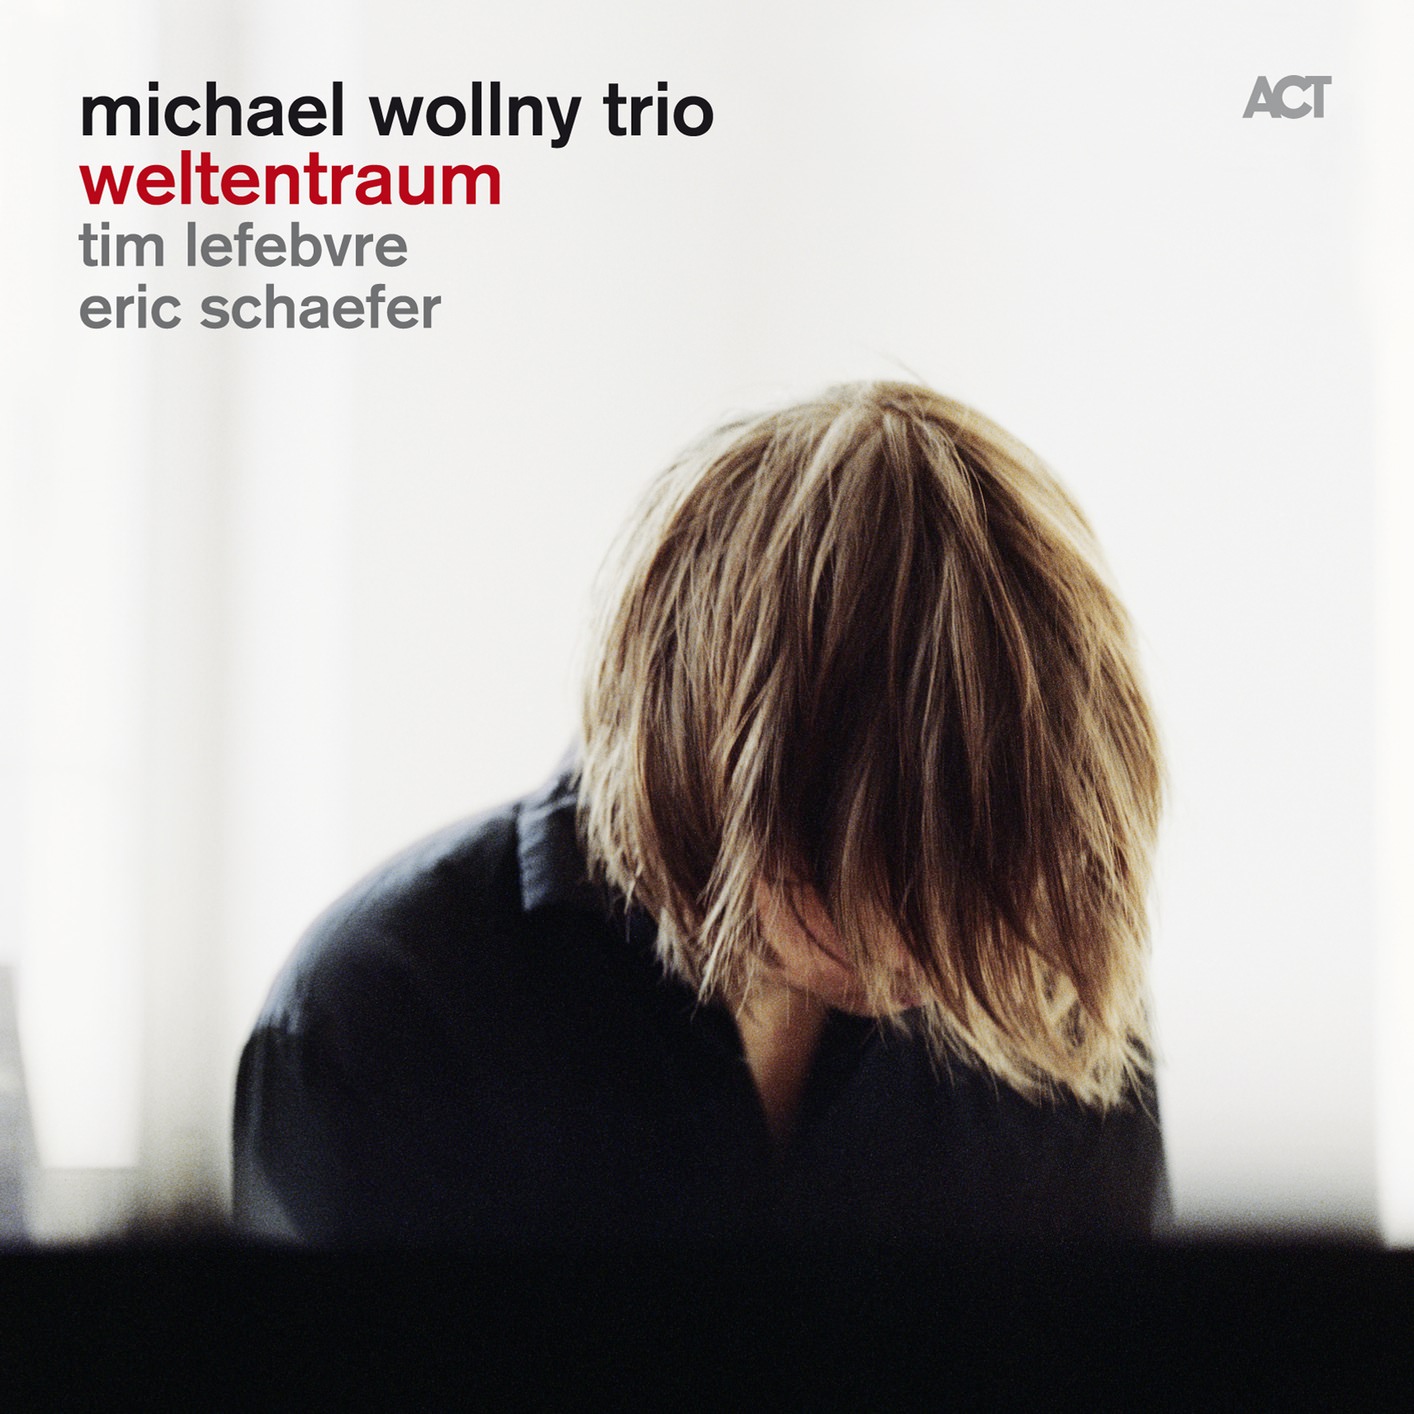 Michael Wollny Trio - Weltentraum (2014) [ProStudioMasters FLAC 24bit/96kHz]